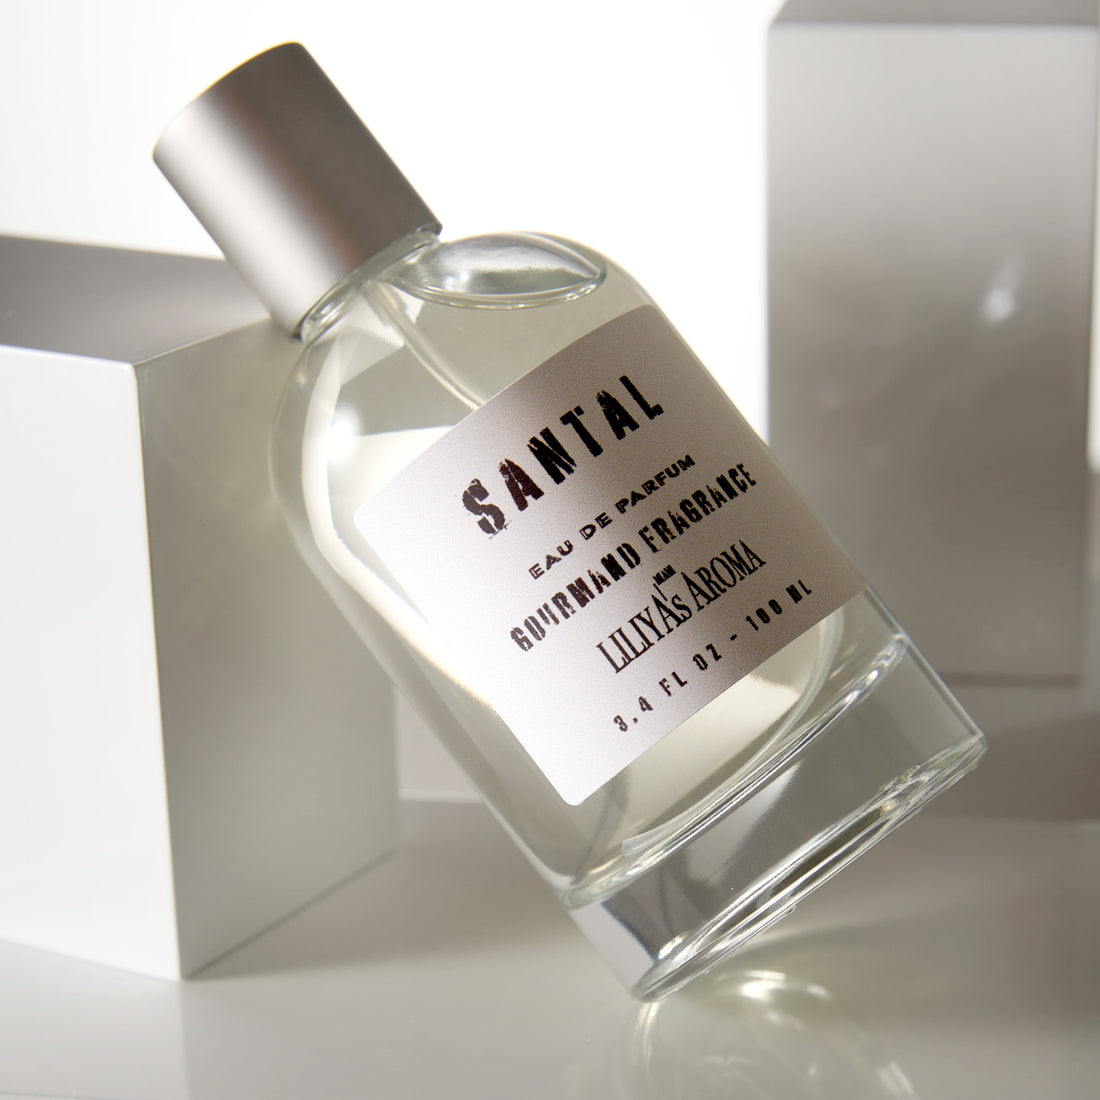 Liliya’s Aroma SANTAL Eau de Parfum, Gourmand Fragrance, VEGAN - Paraben Free, 3.4 Fl Oz